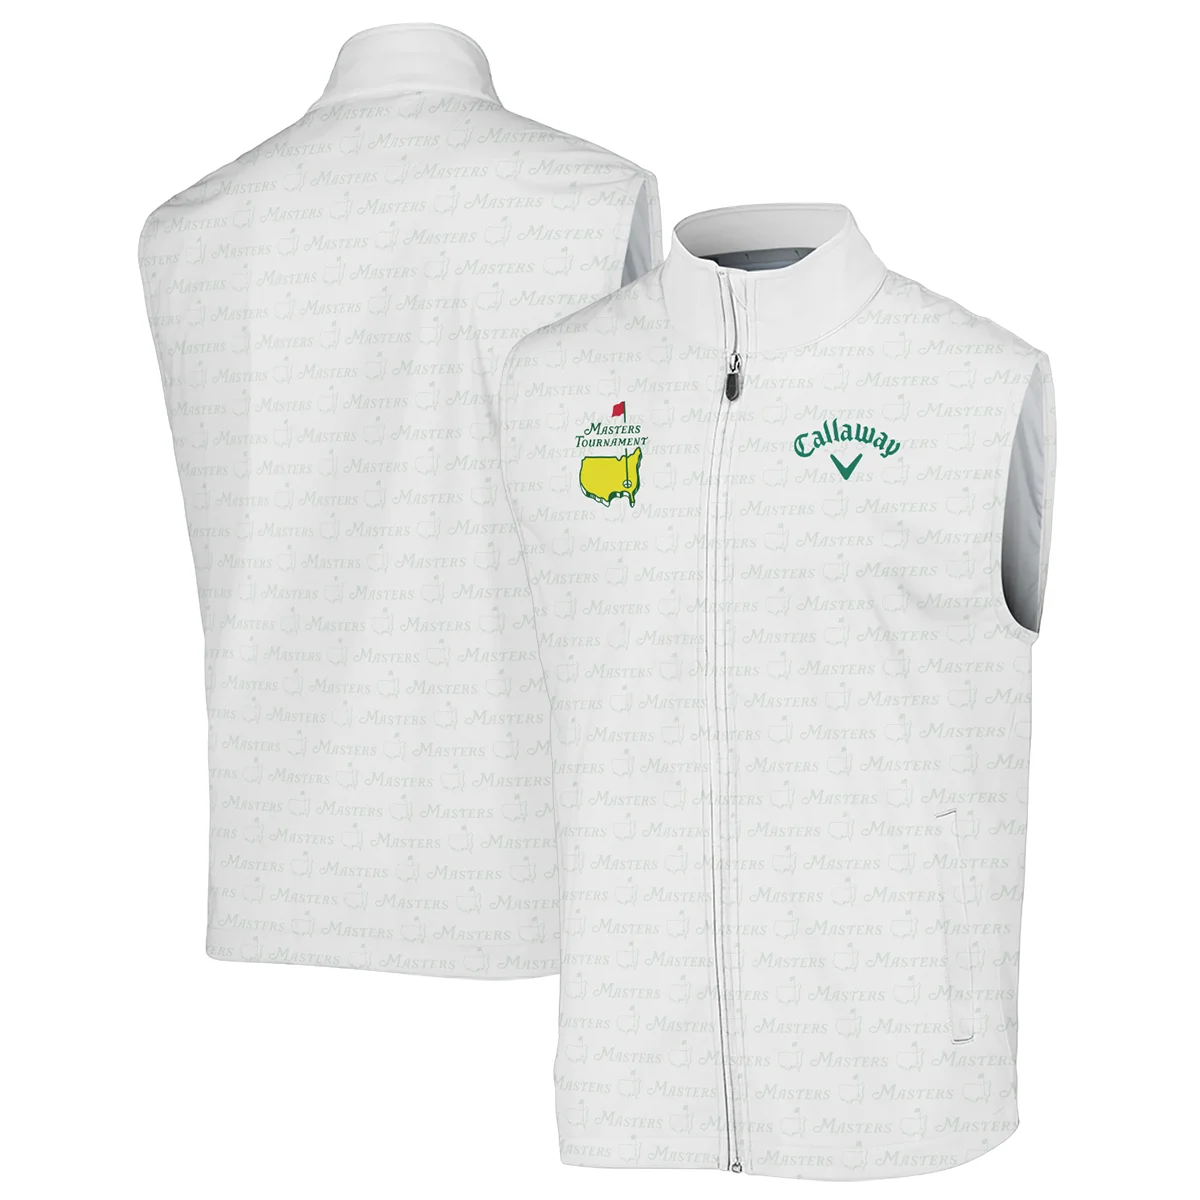 Pattern Masters Tournament Callaway Sleeveless Jacket White Green Sport Love Clothing Sleeveless Jacket